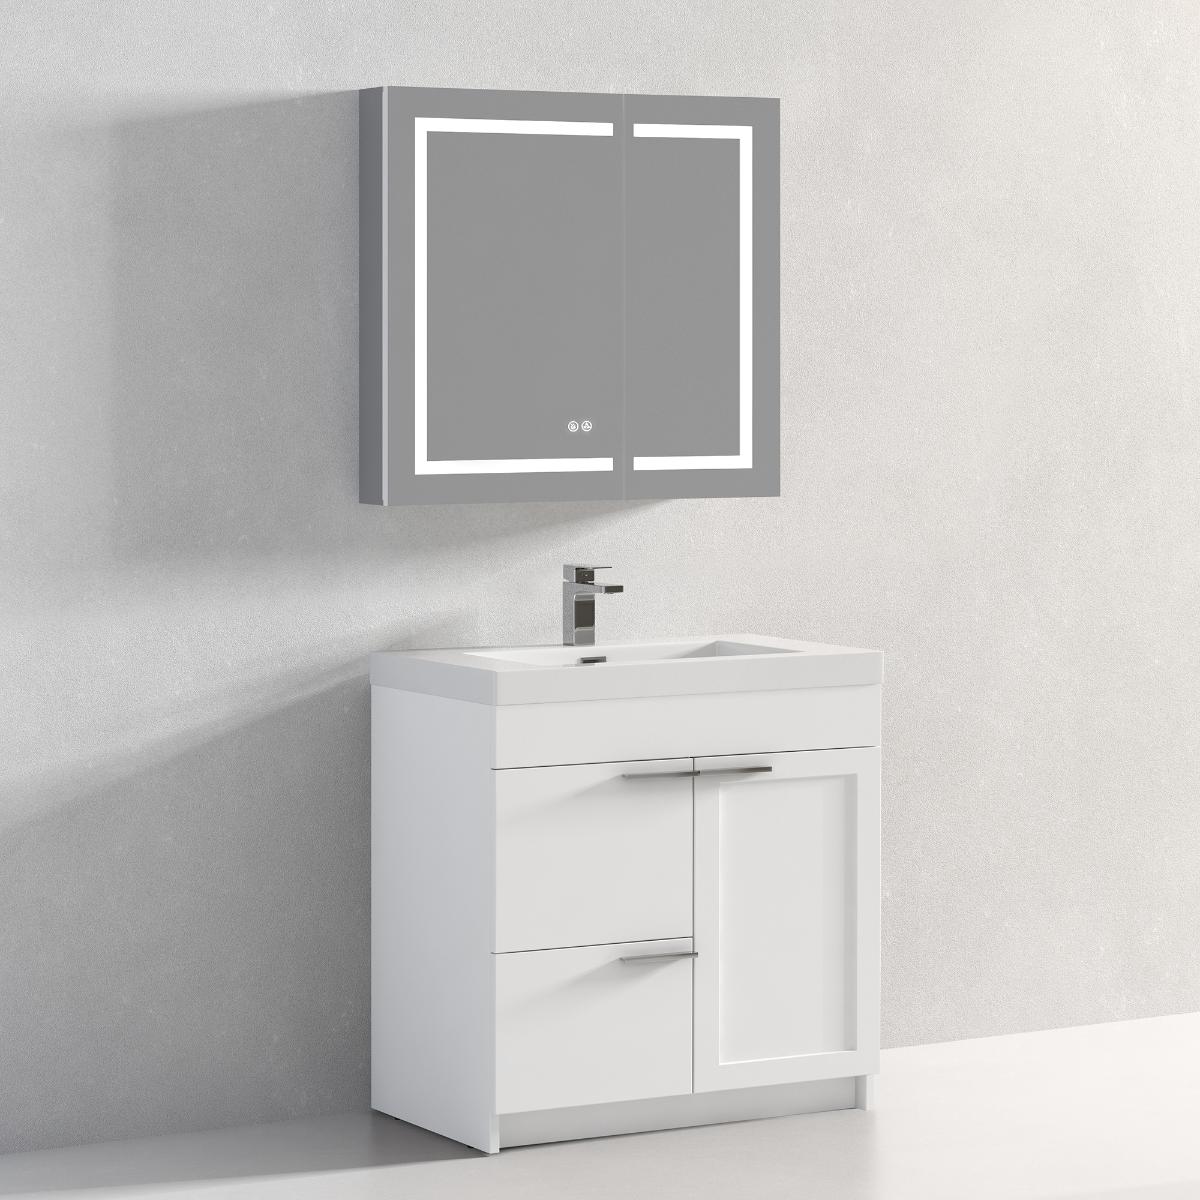 Hanover 36" Bathroom Vanity  #size_36"  #color_matte white